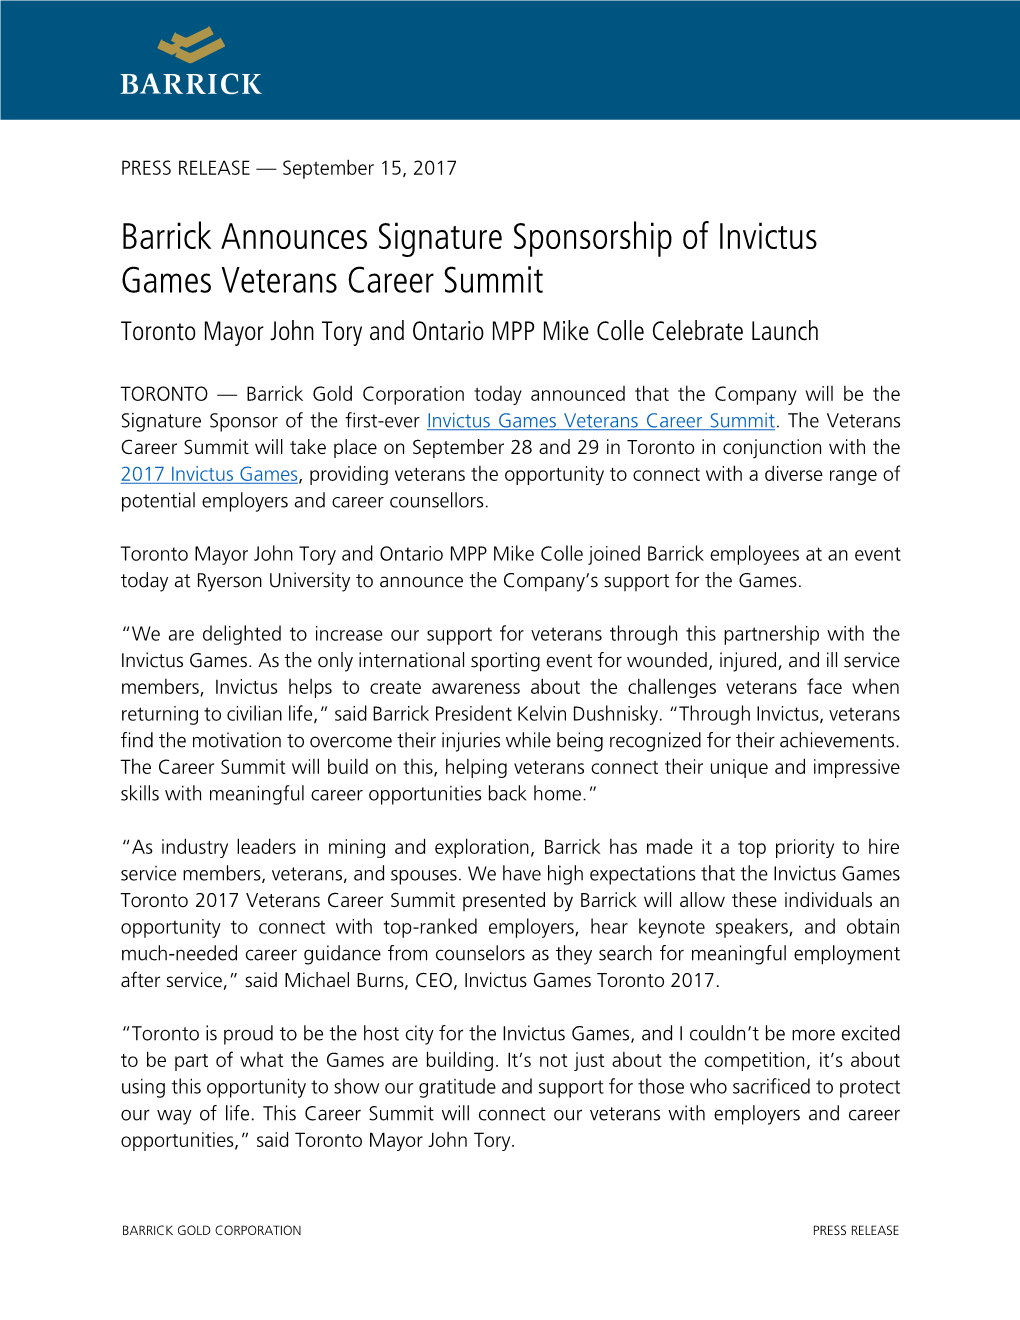 Barrick Announces Signature Sponsorship of Invictus Games Veterans Career Summit Toronto Mayor John Tory and Ontario MPP Mike Colle Celebrate Launch